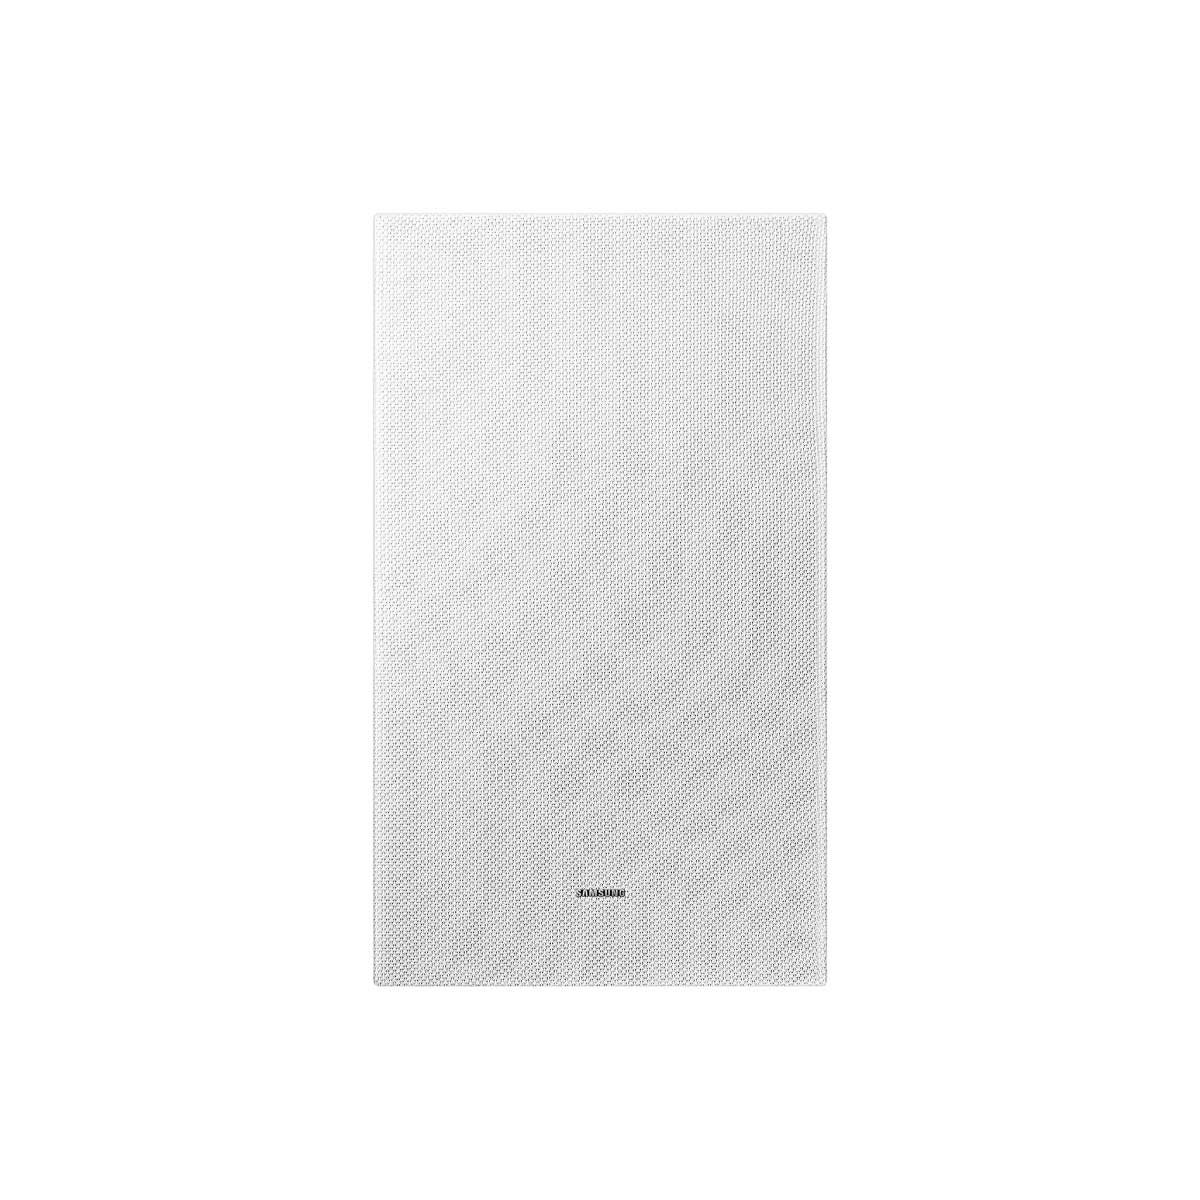 SAMSUNG Soundbar Ultra Slim ชุดลำโพงซาวด์บาร์ รุ่น HW-S701D/XT สีขาว WHITE